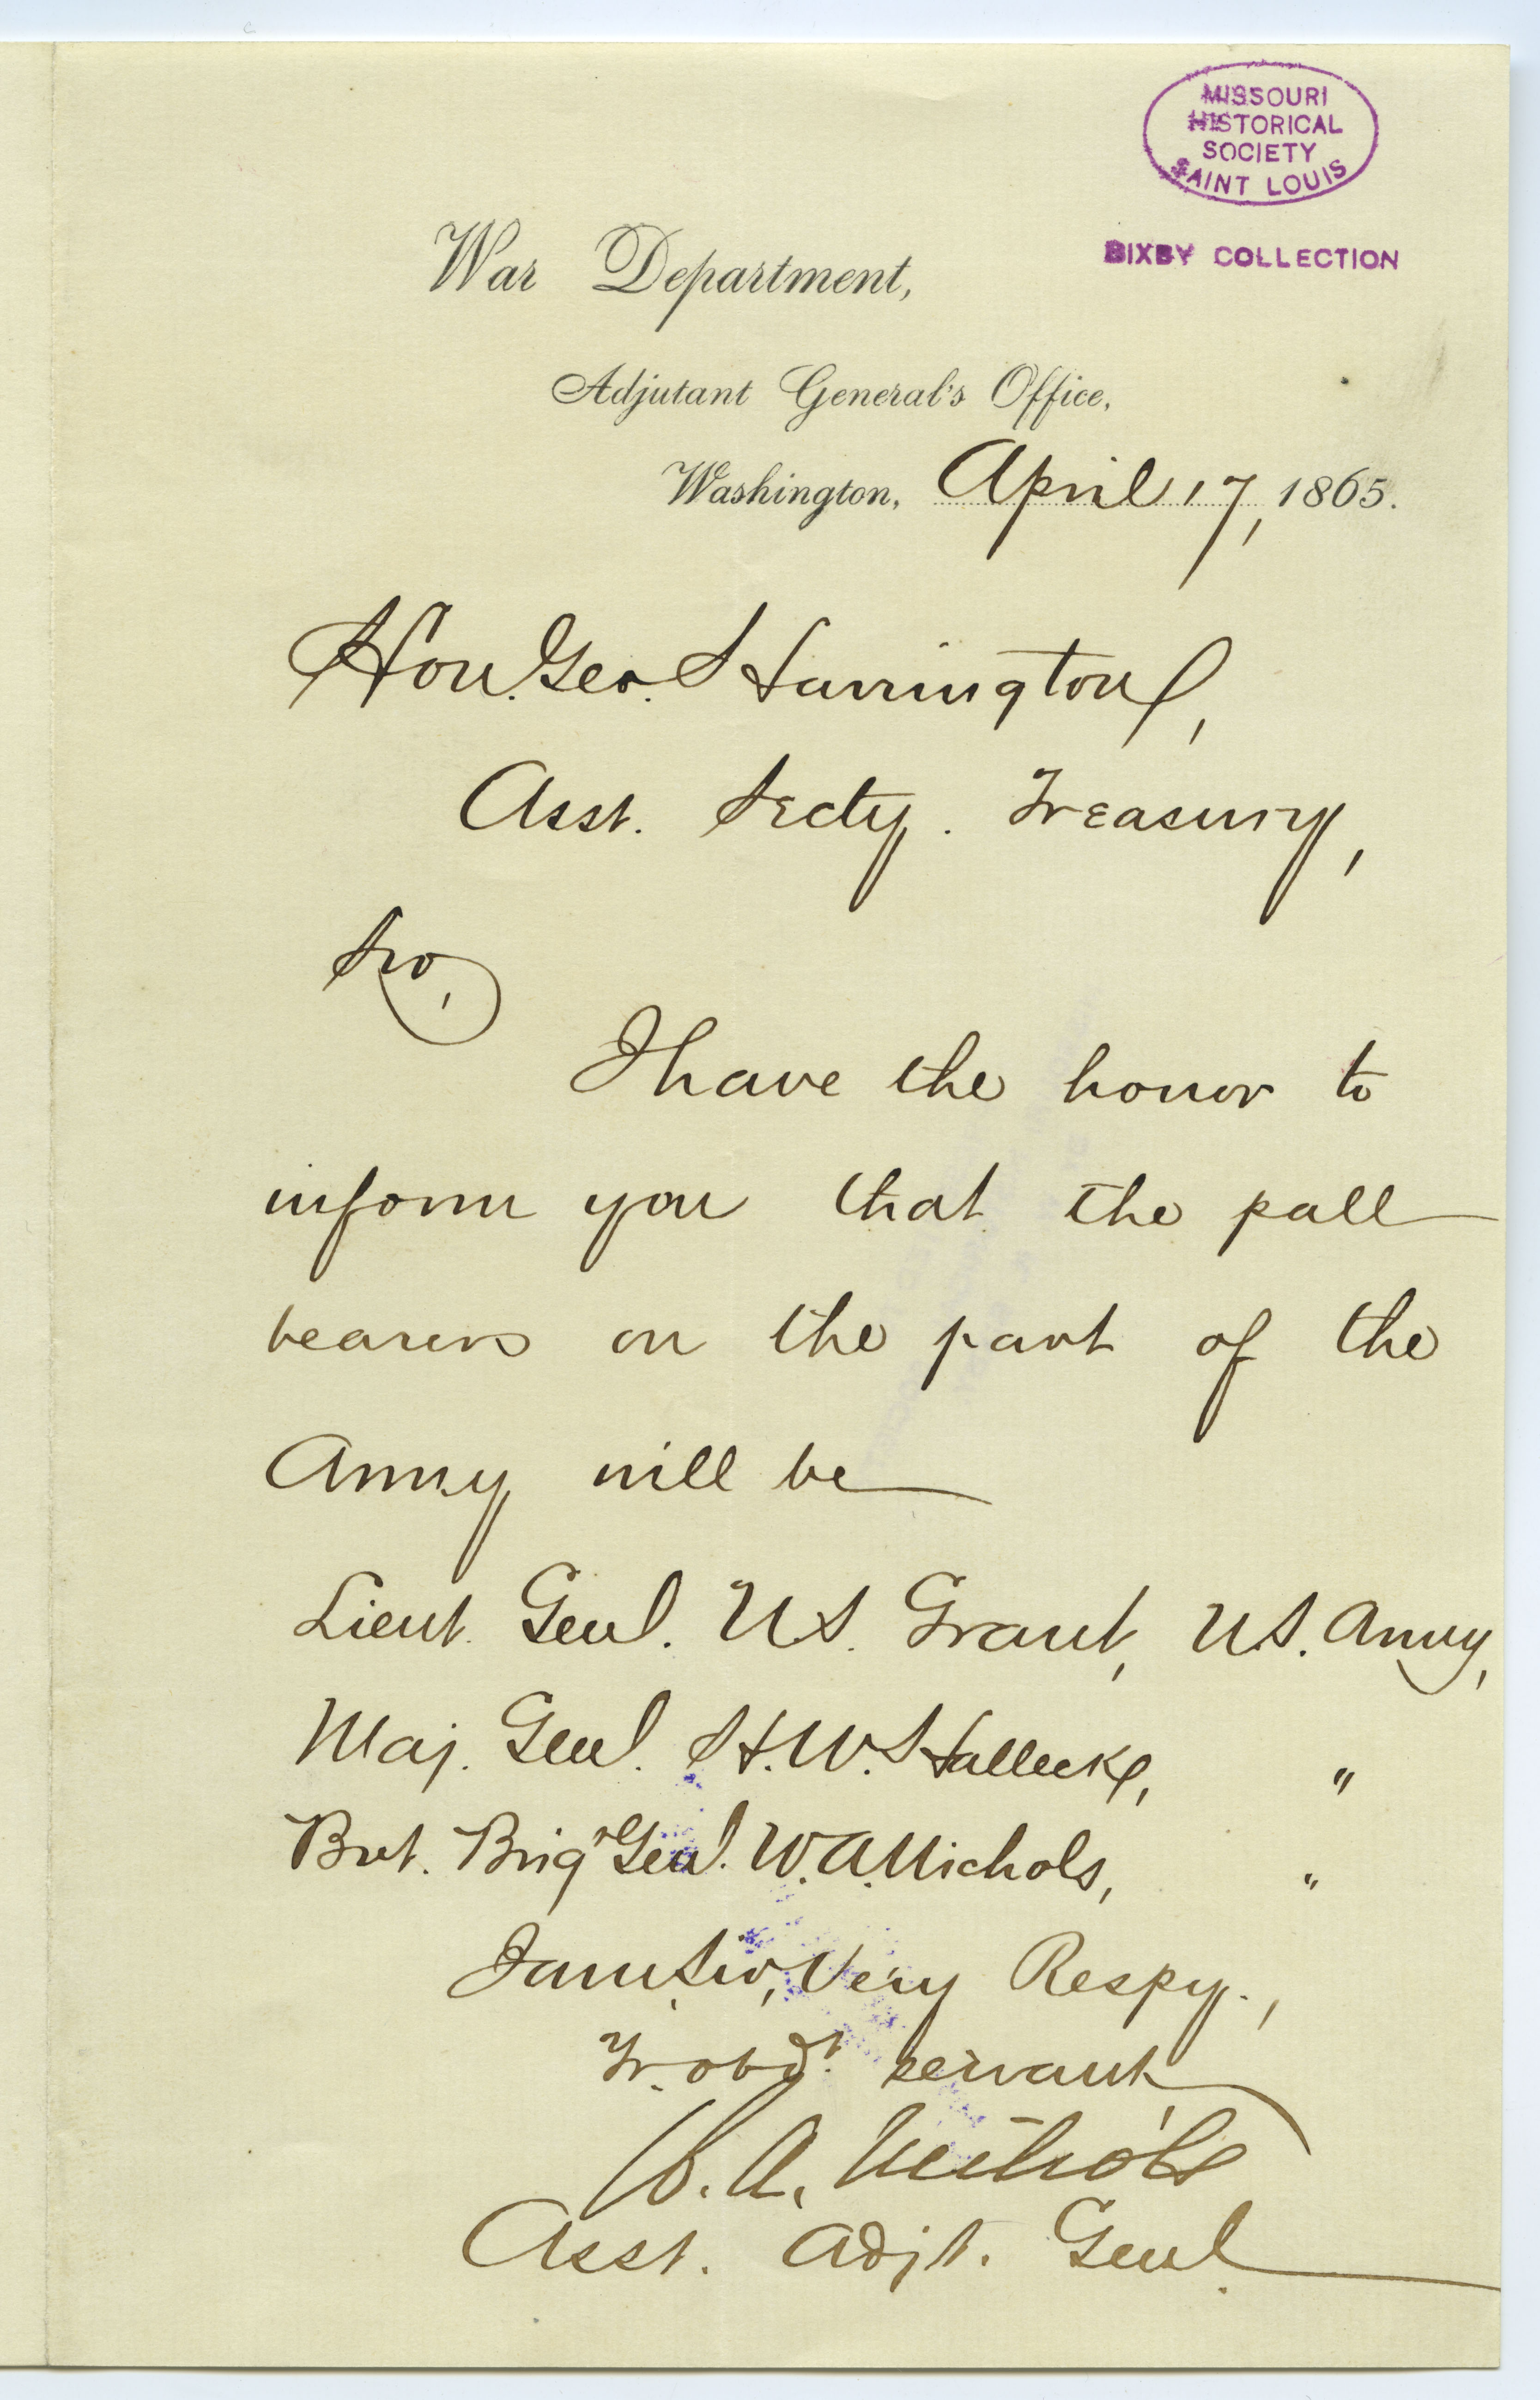 Note signed W.A. Nichols, Asst. Adjt. Genl., War Department, Adjutant General's Office, Washington, to Hon. Geo. Harrington [George Harrington], Asst. Secty. Treasury, April 17, 1865